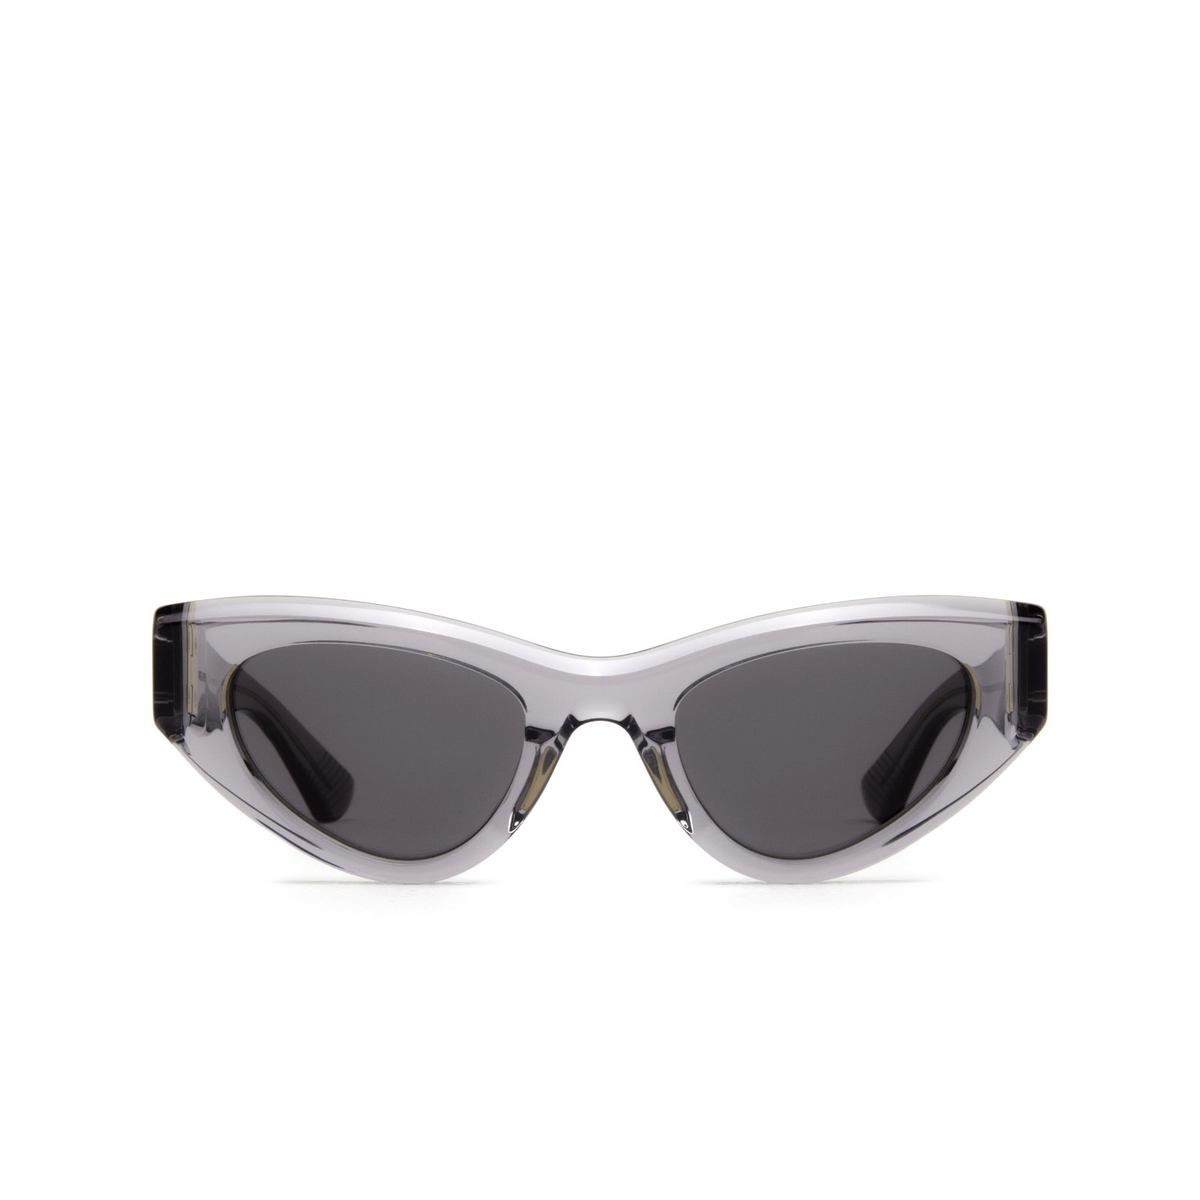 Bottega Veneta® Cat-eye Sunglasses: BV1142S color Grey 001 - front view.